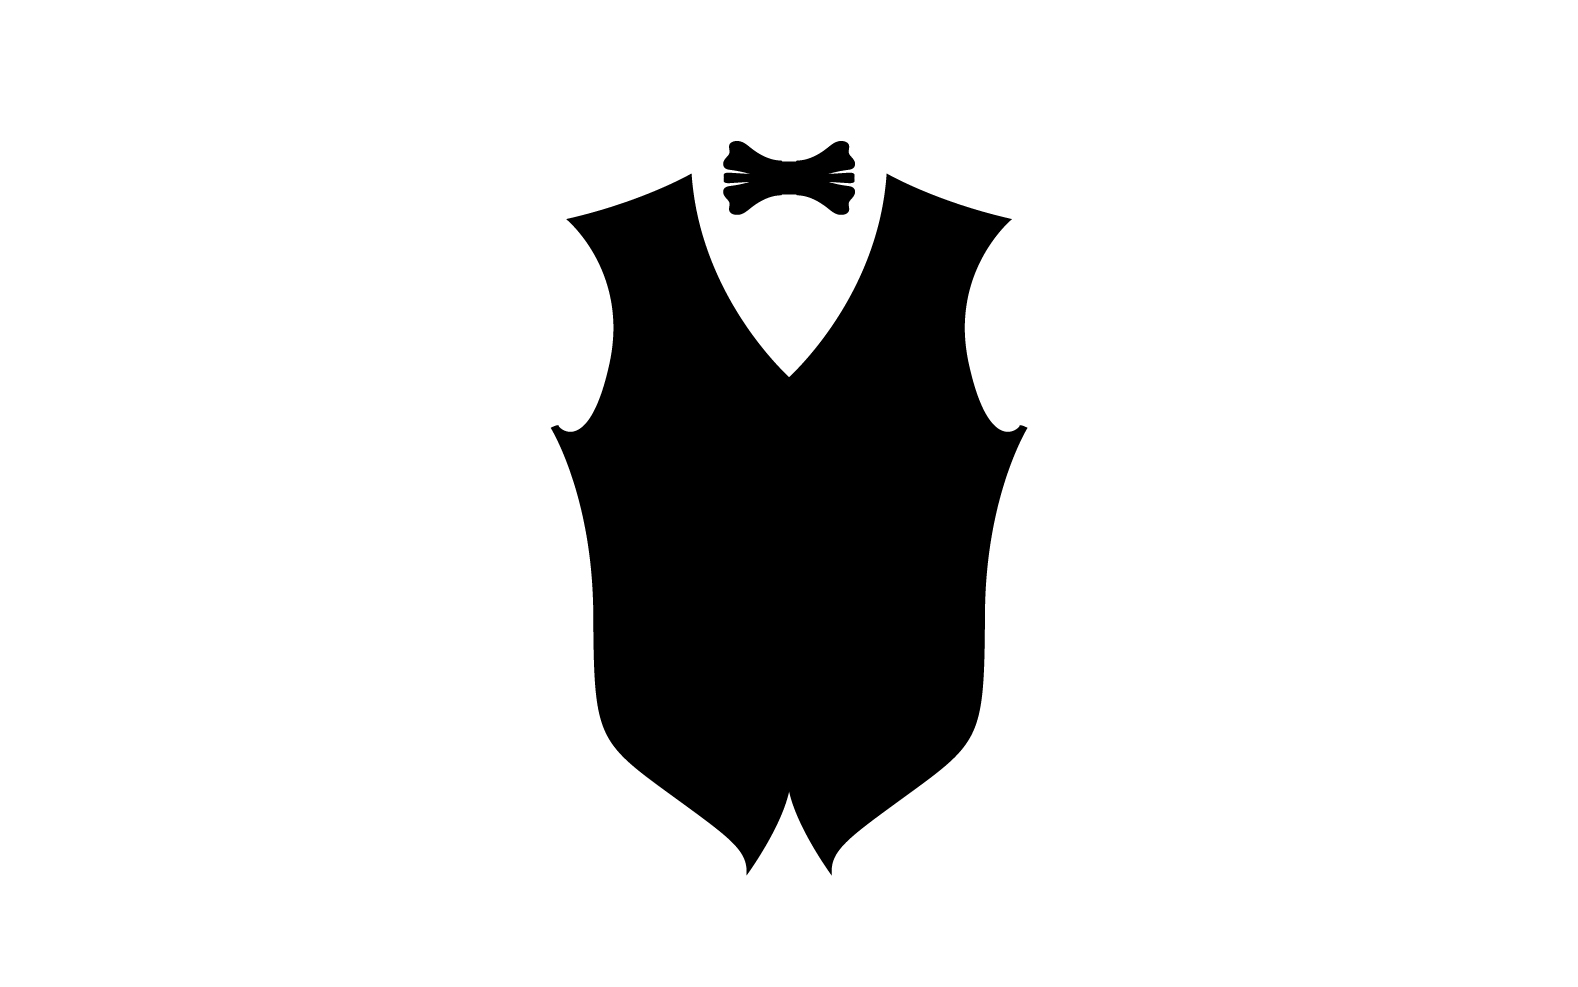 Maid suit logo and symbol vector design v5